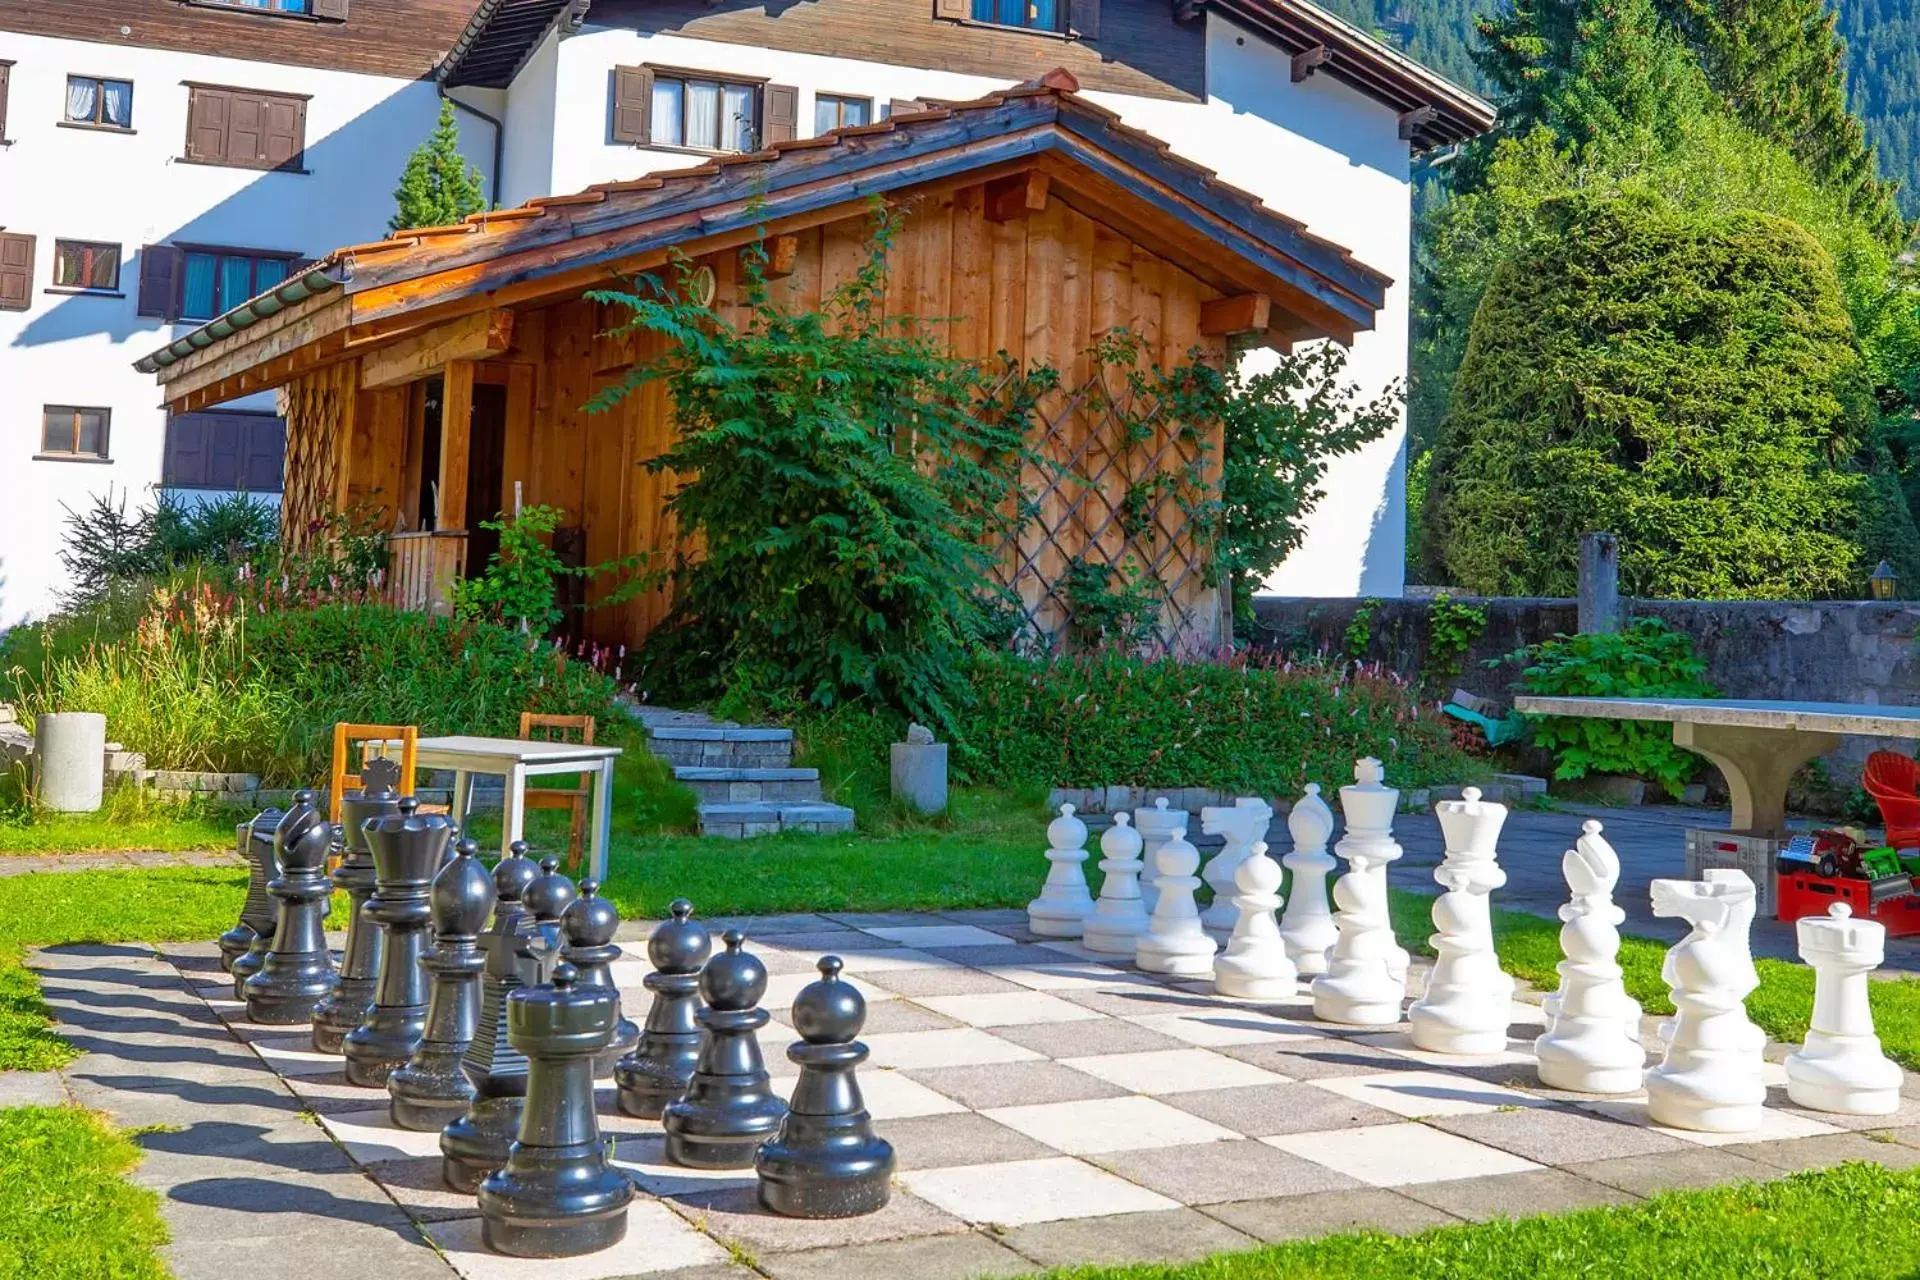 Garden in Sport-Lodge Klosters